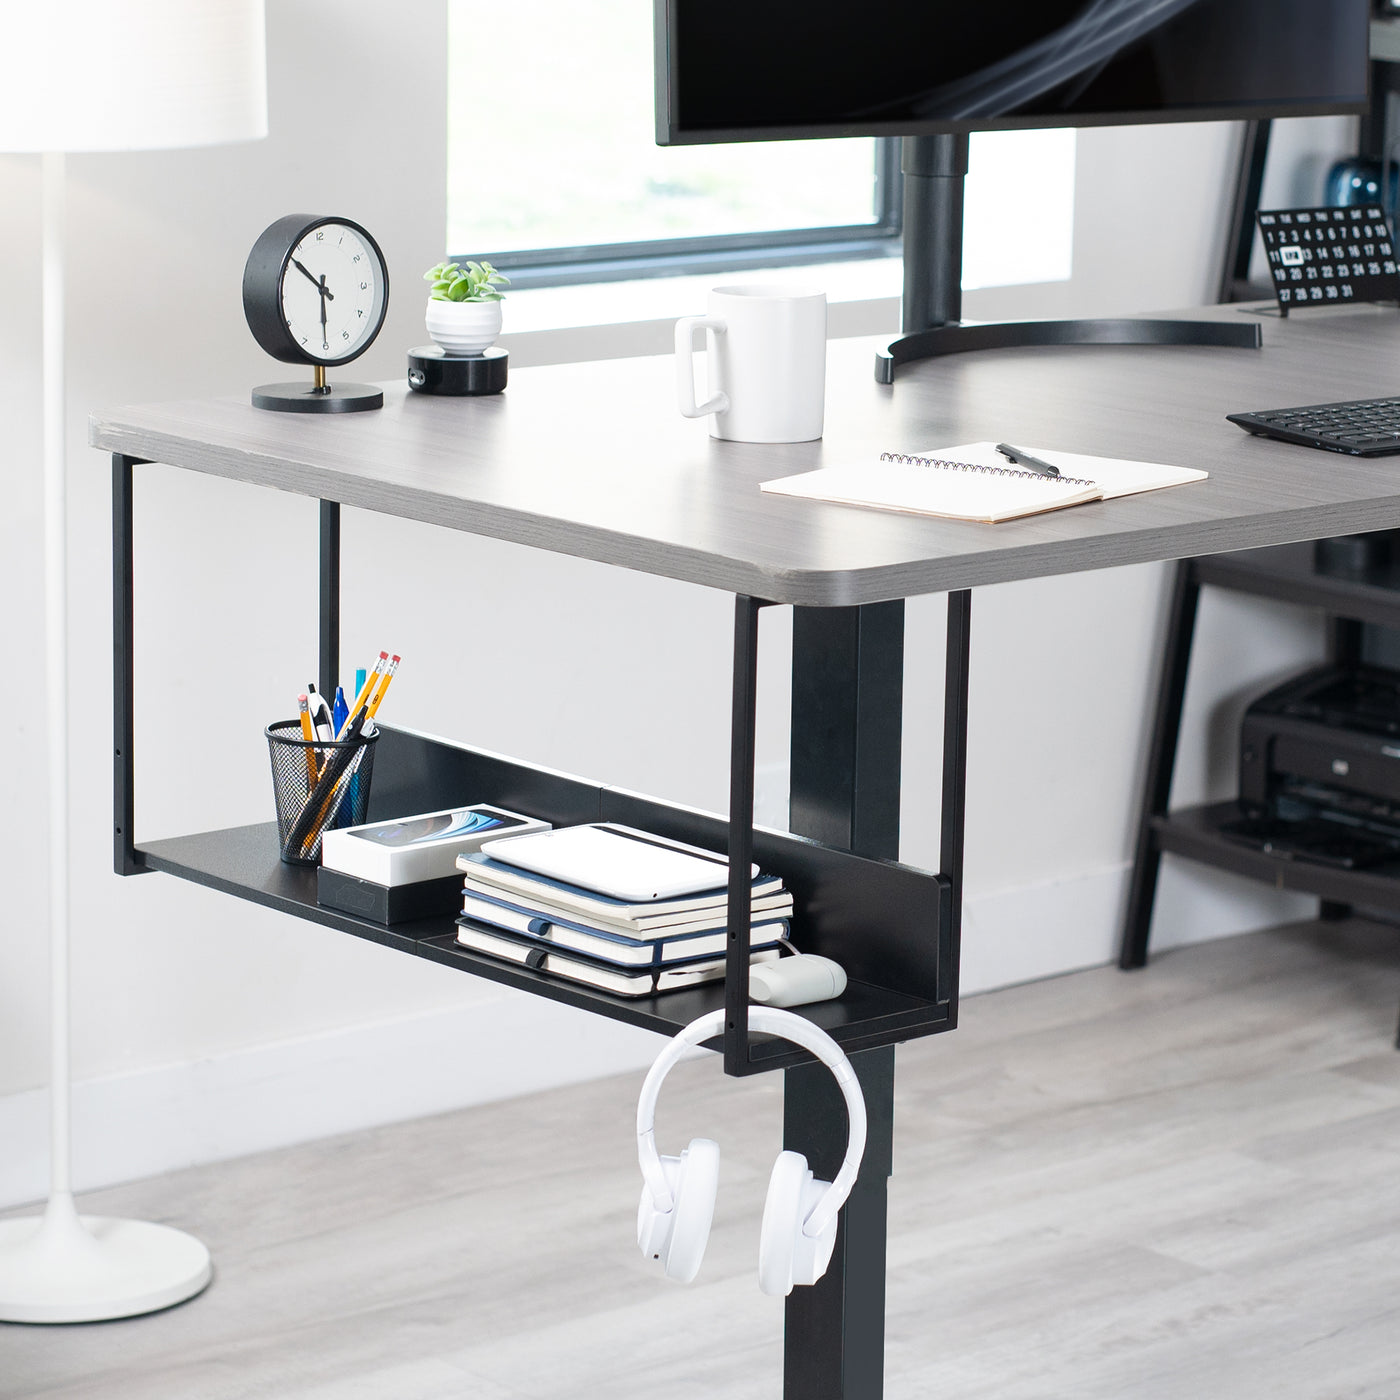 Sleek modern under desk shelf with safety back for flexible convenient storage and organization.